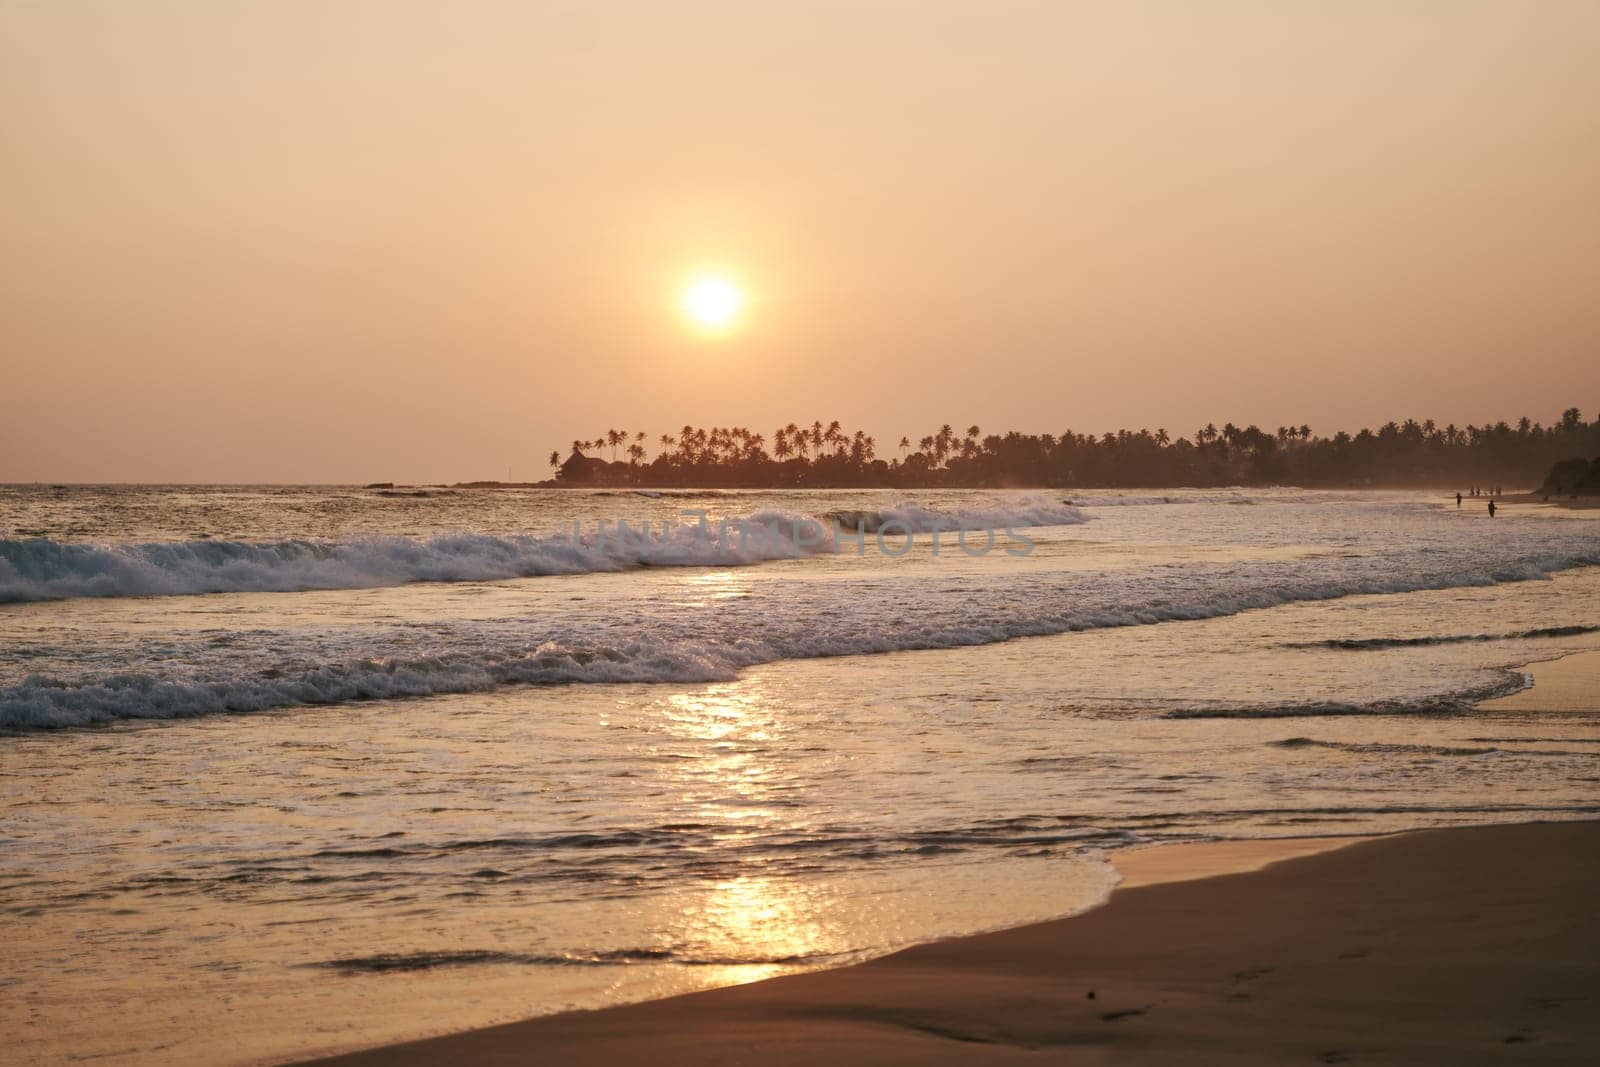 Sunset on the ocean in Sri Lanka. High quality photo